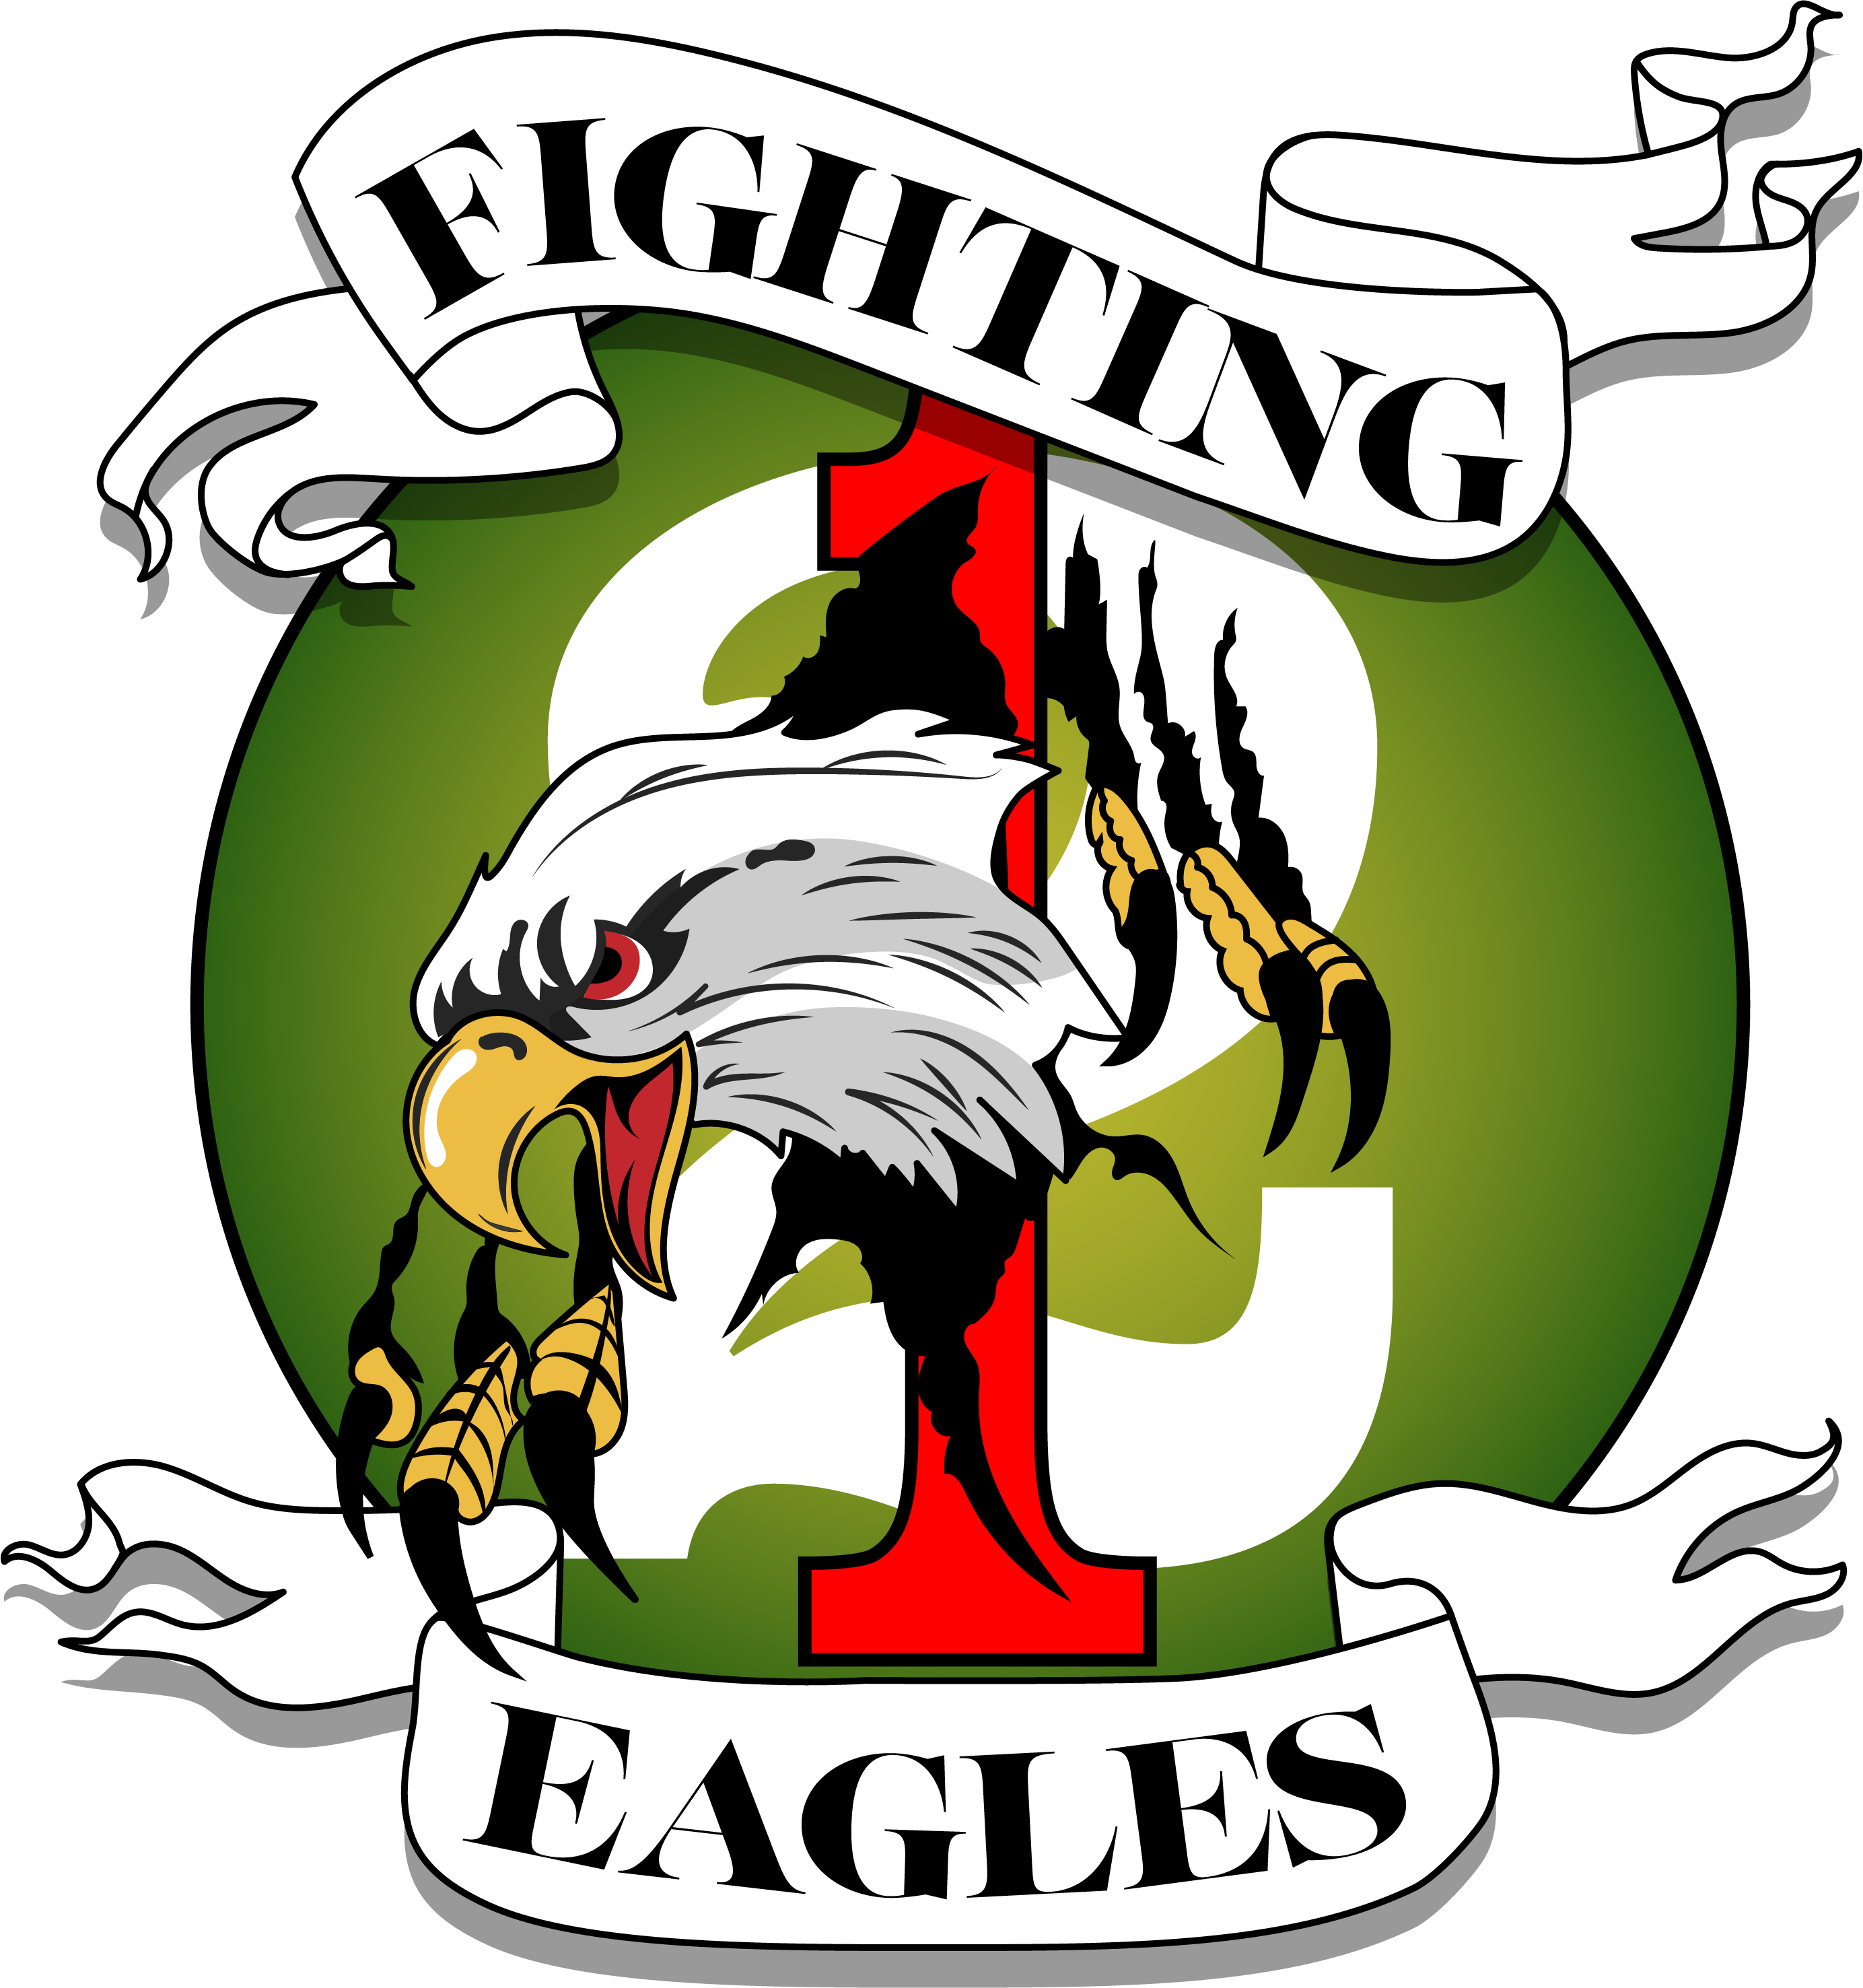 2-1 GSAB "Fighting Eagles"